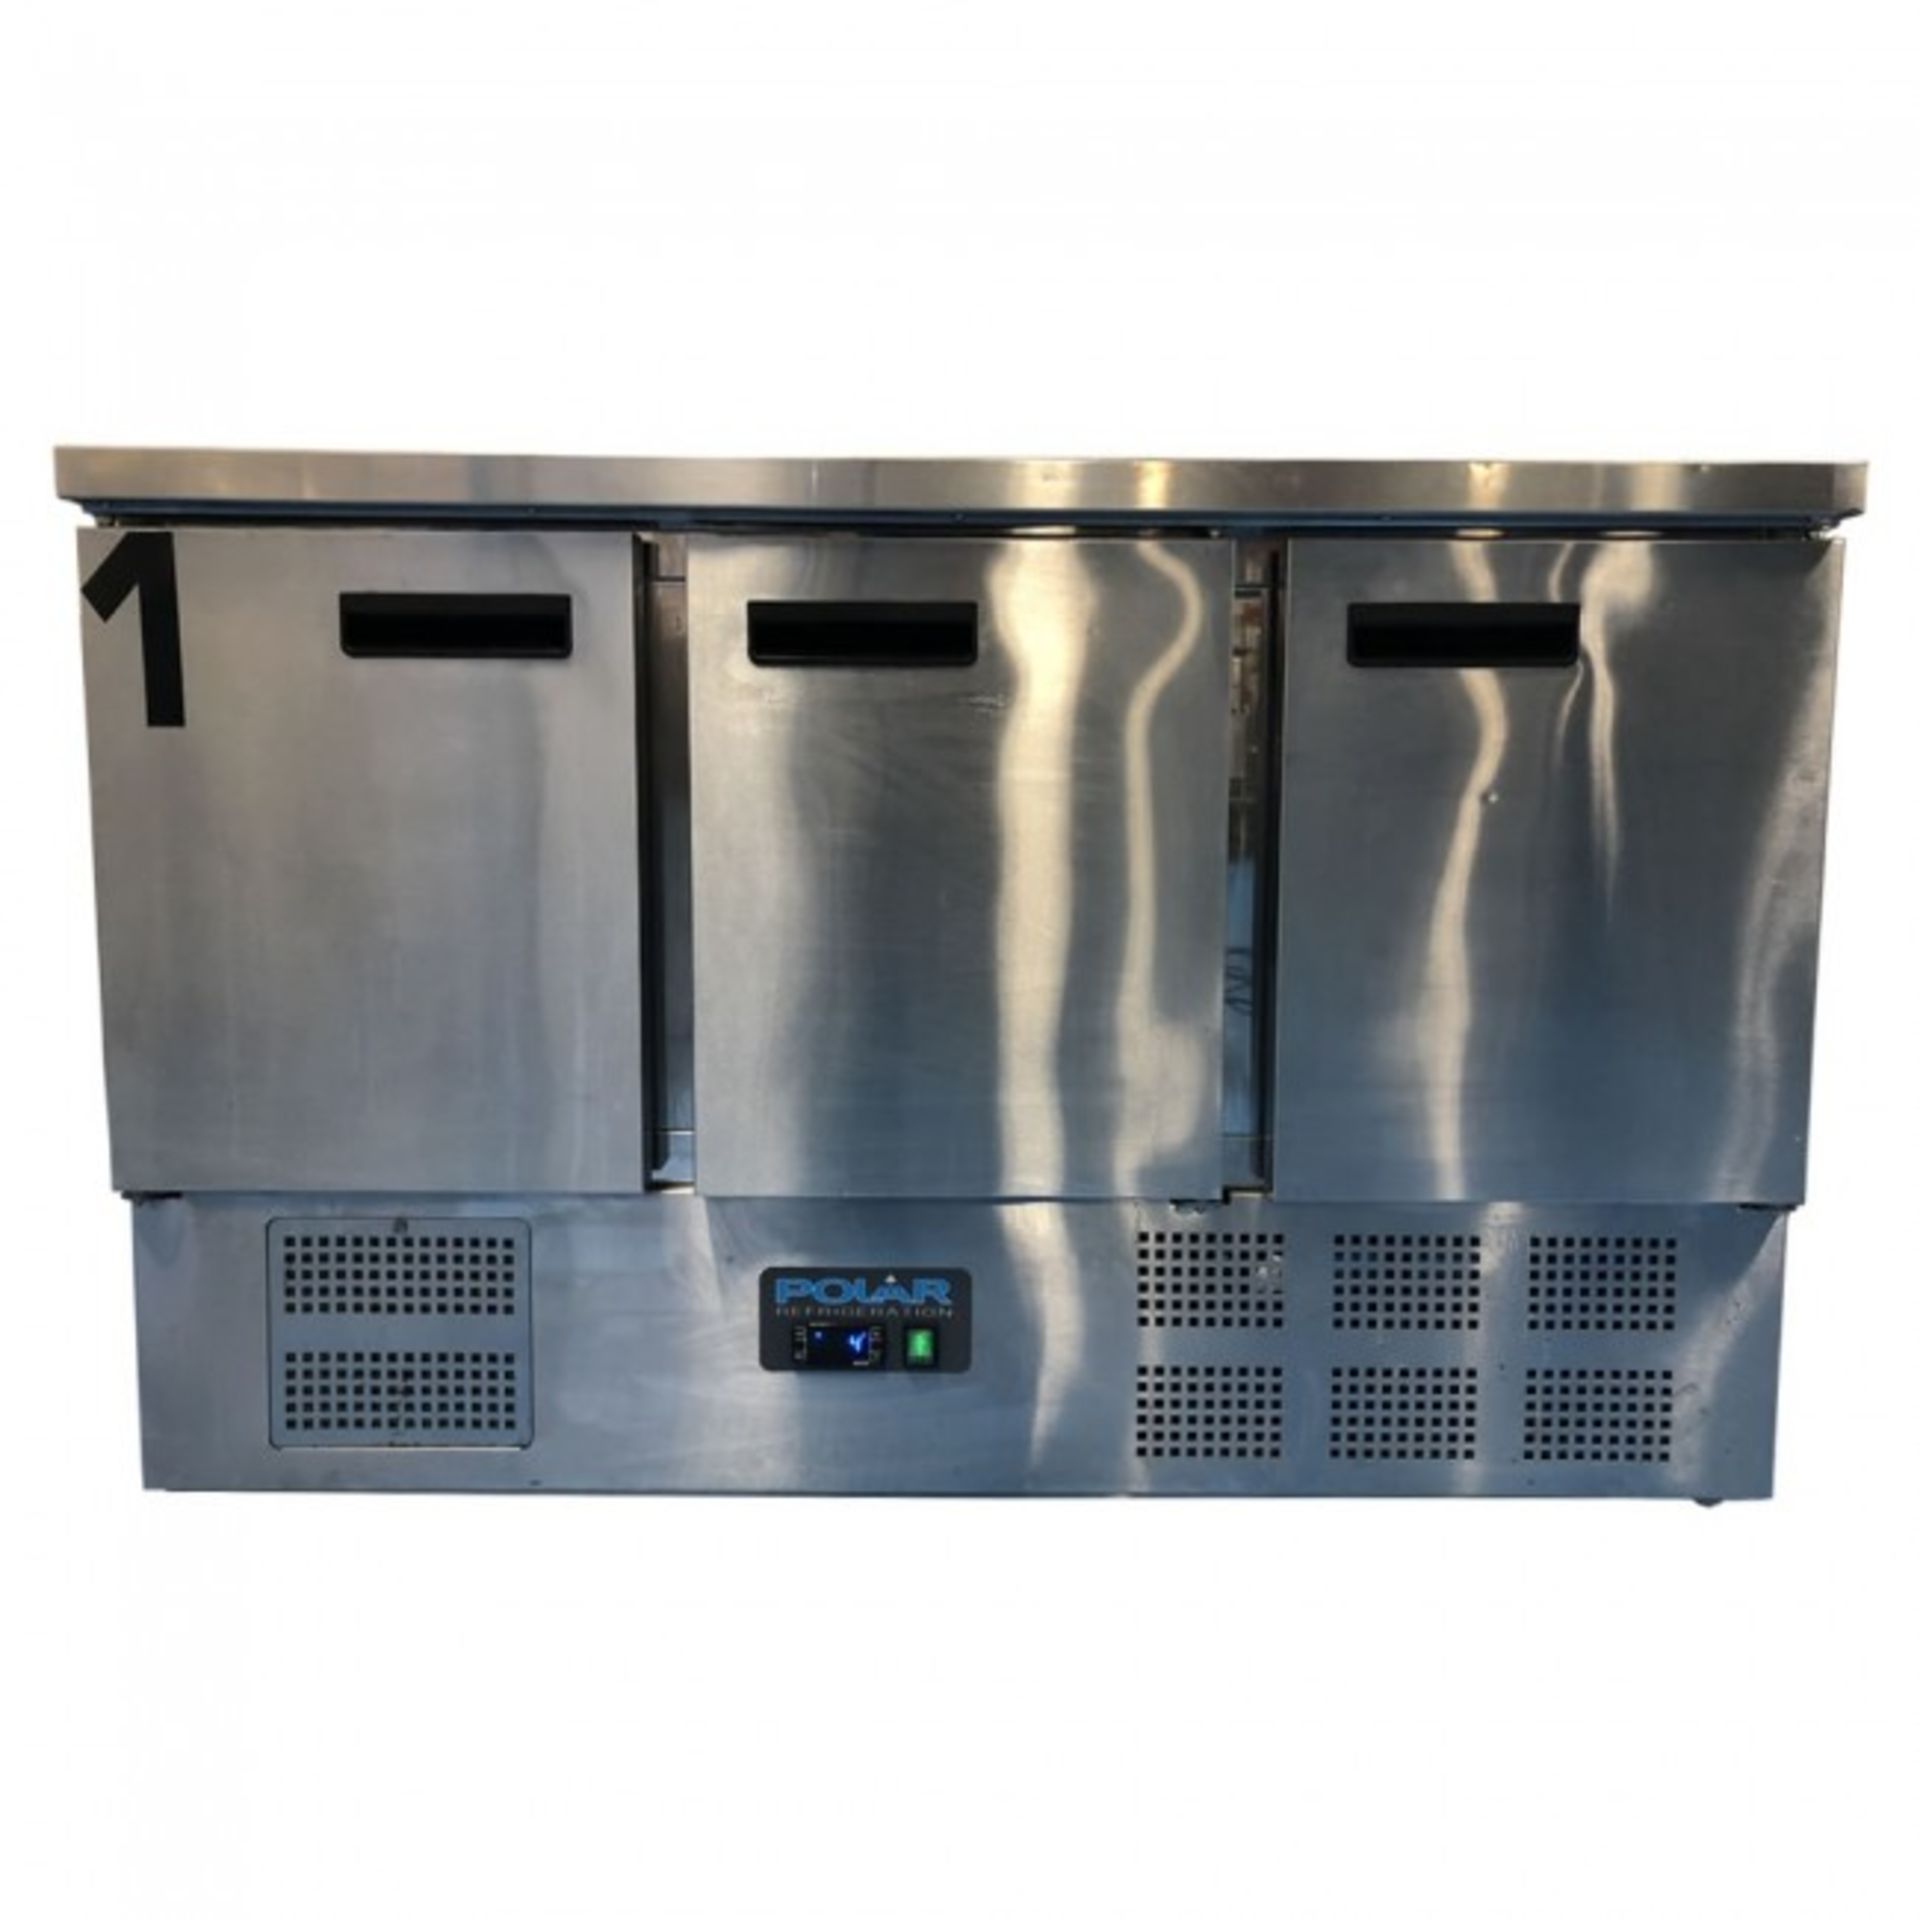 Polar G622 3 Door Counter refrigerator 368Ltr capacity temperature range 2°C to 8°C 1/1 gastronorm